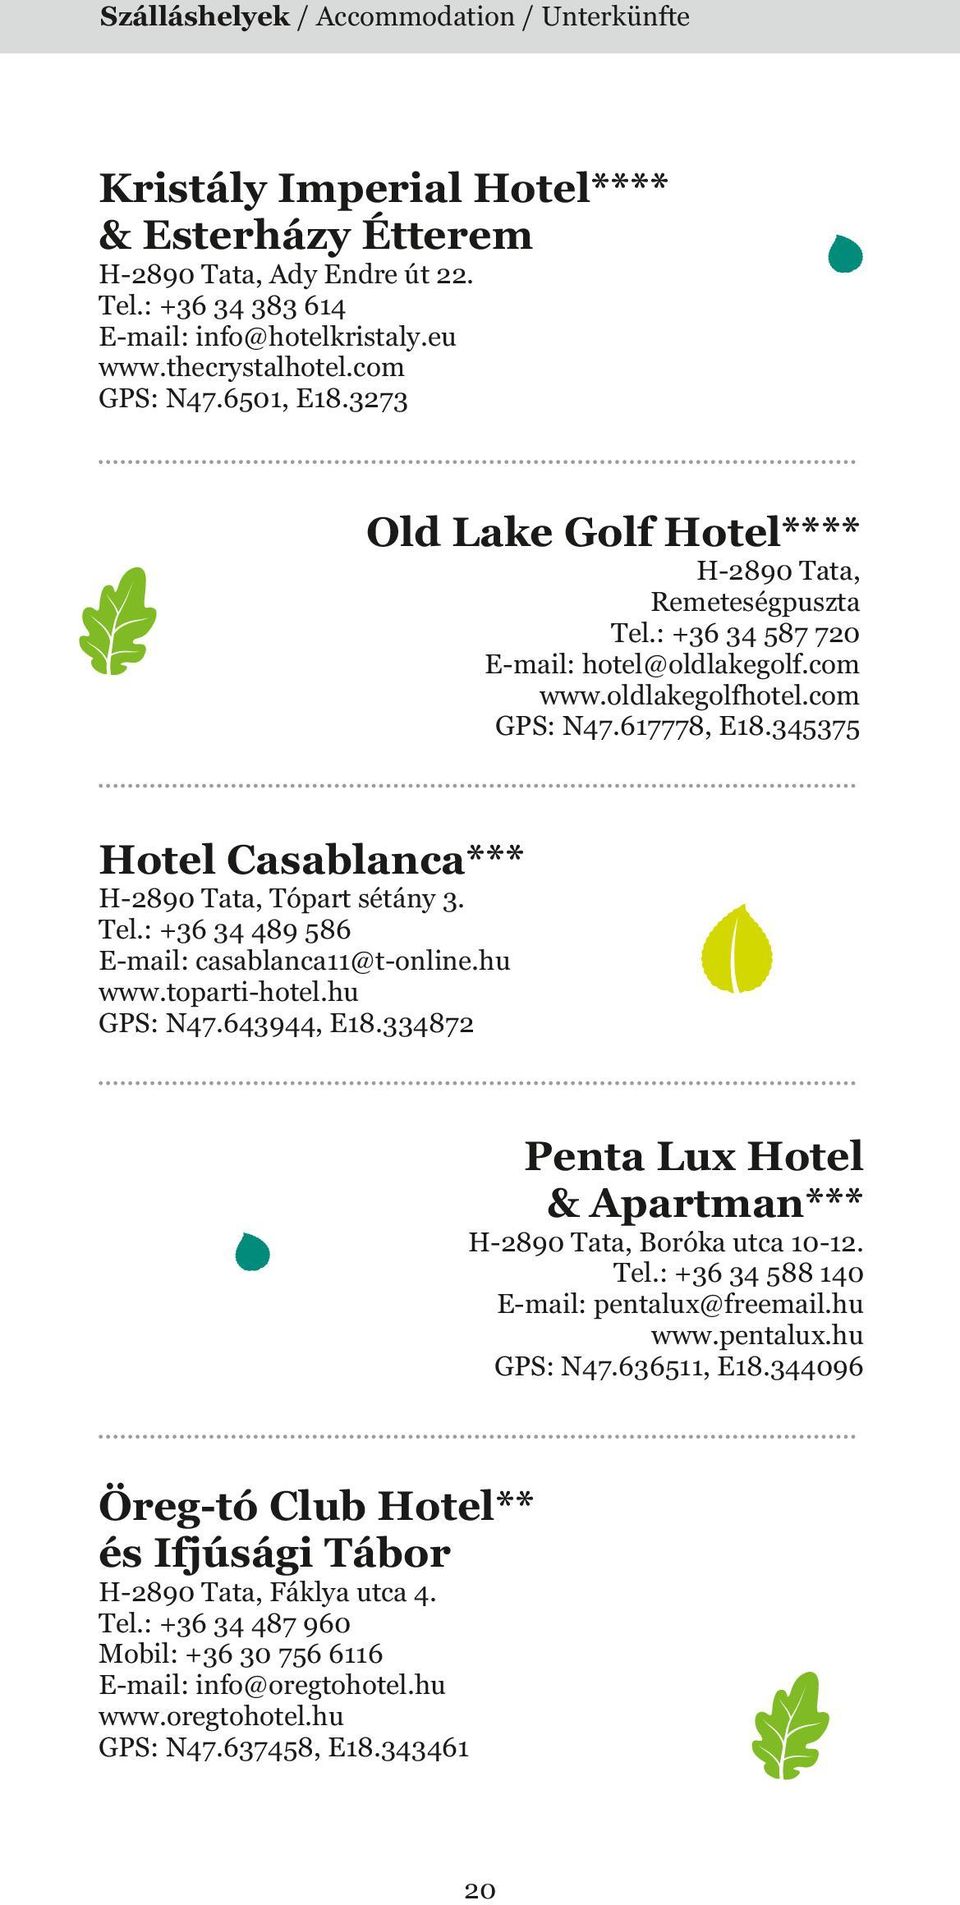 345375 Hotel Casablanca*** H-2890 Tata, Tópart sétány 3. Tel.: +36 34 489 586 E-mail: casablanca11@t-online.hu www.toparti-hotel.hu GPS: N47.643944, E18.